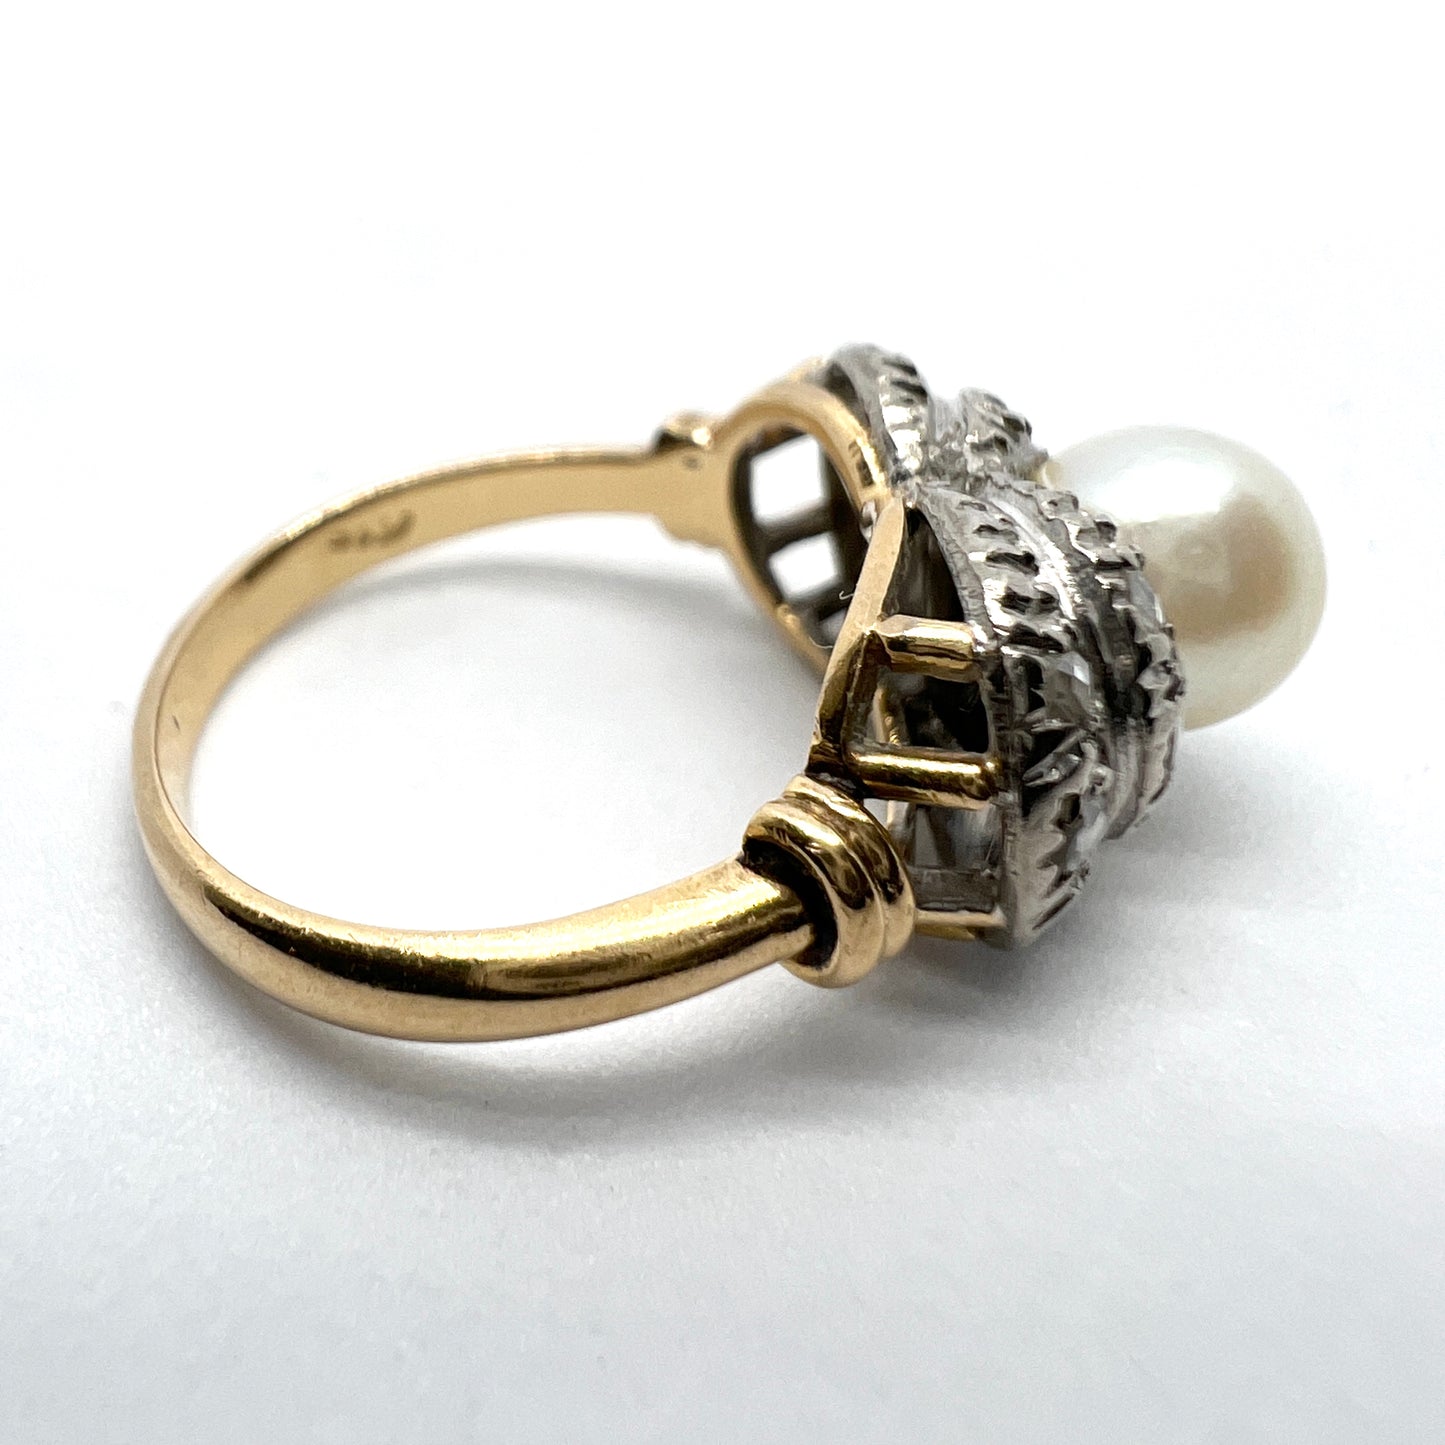 Vintage 1940-50s. 18k Gold Diamond Pearl Pinky Ring.